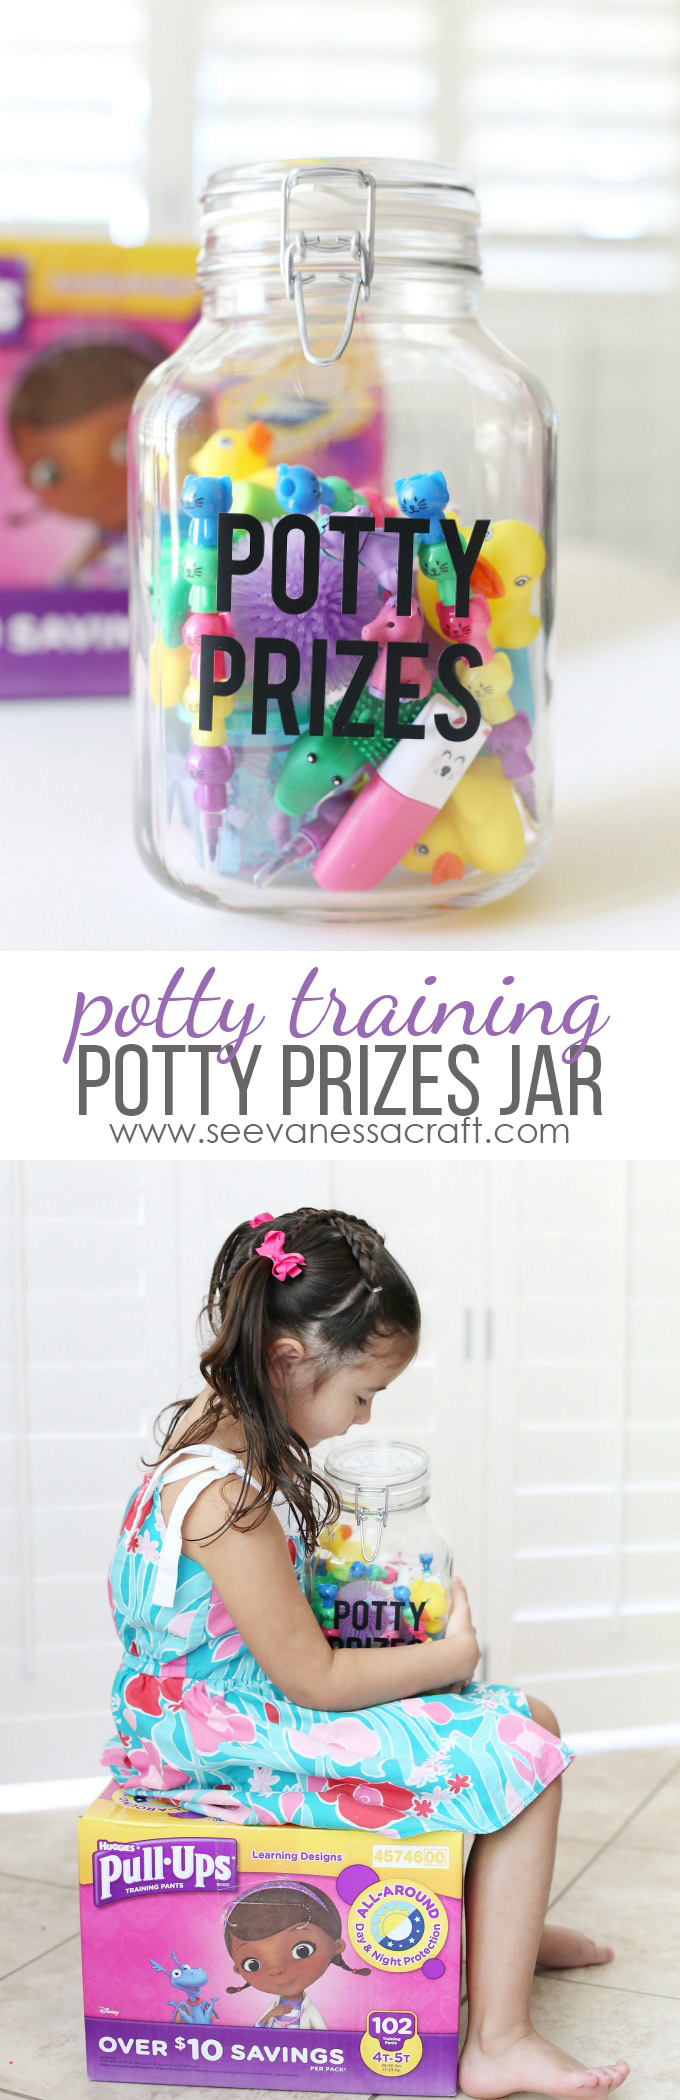 Potty Prizes Jar for Potty Training copy